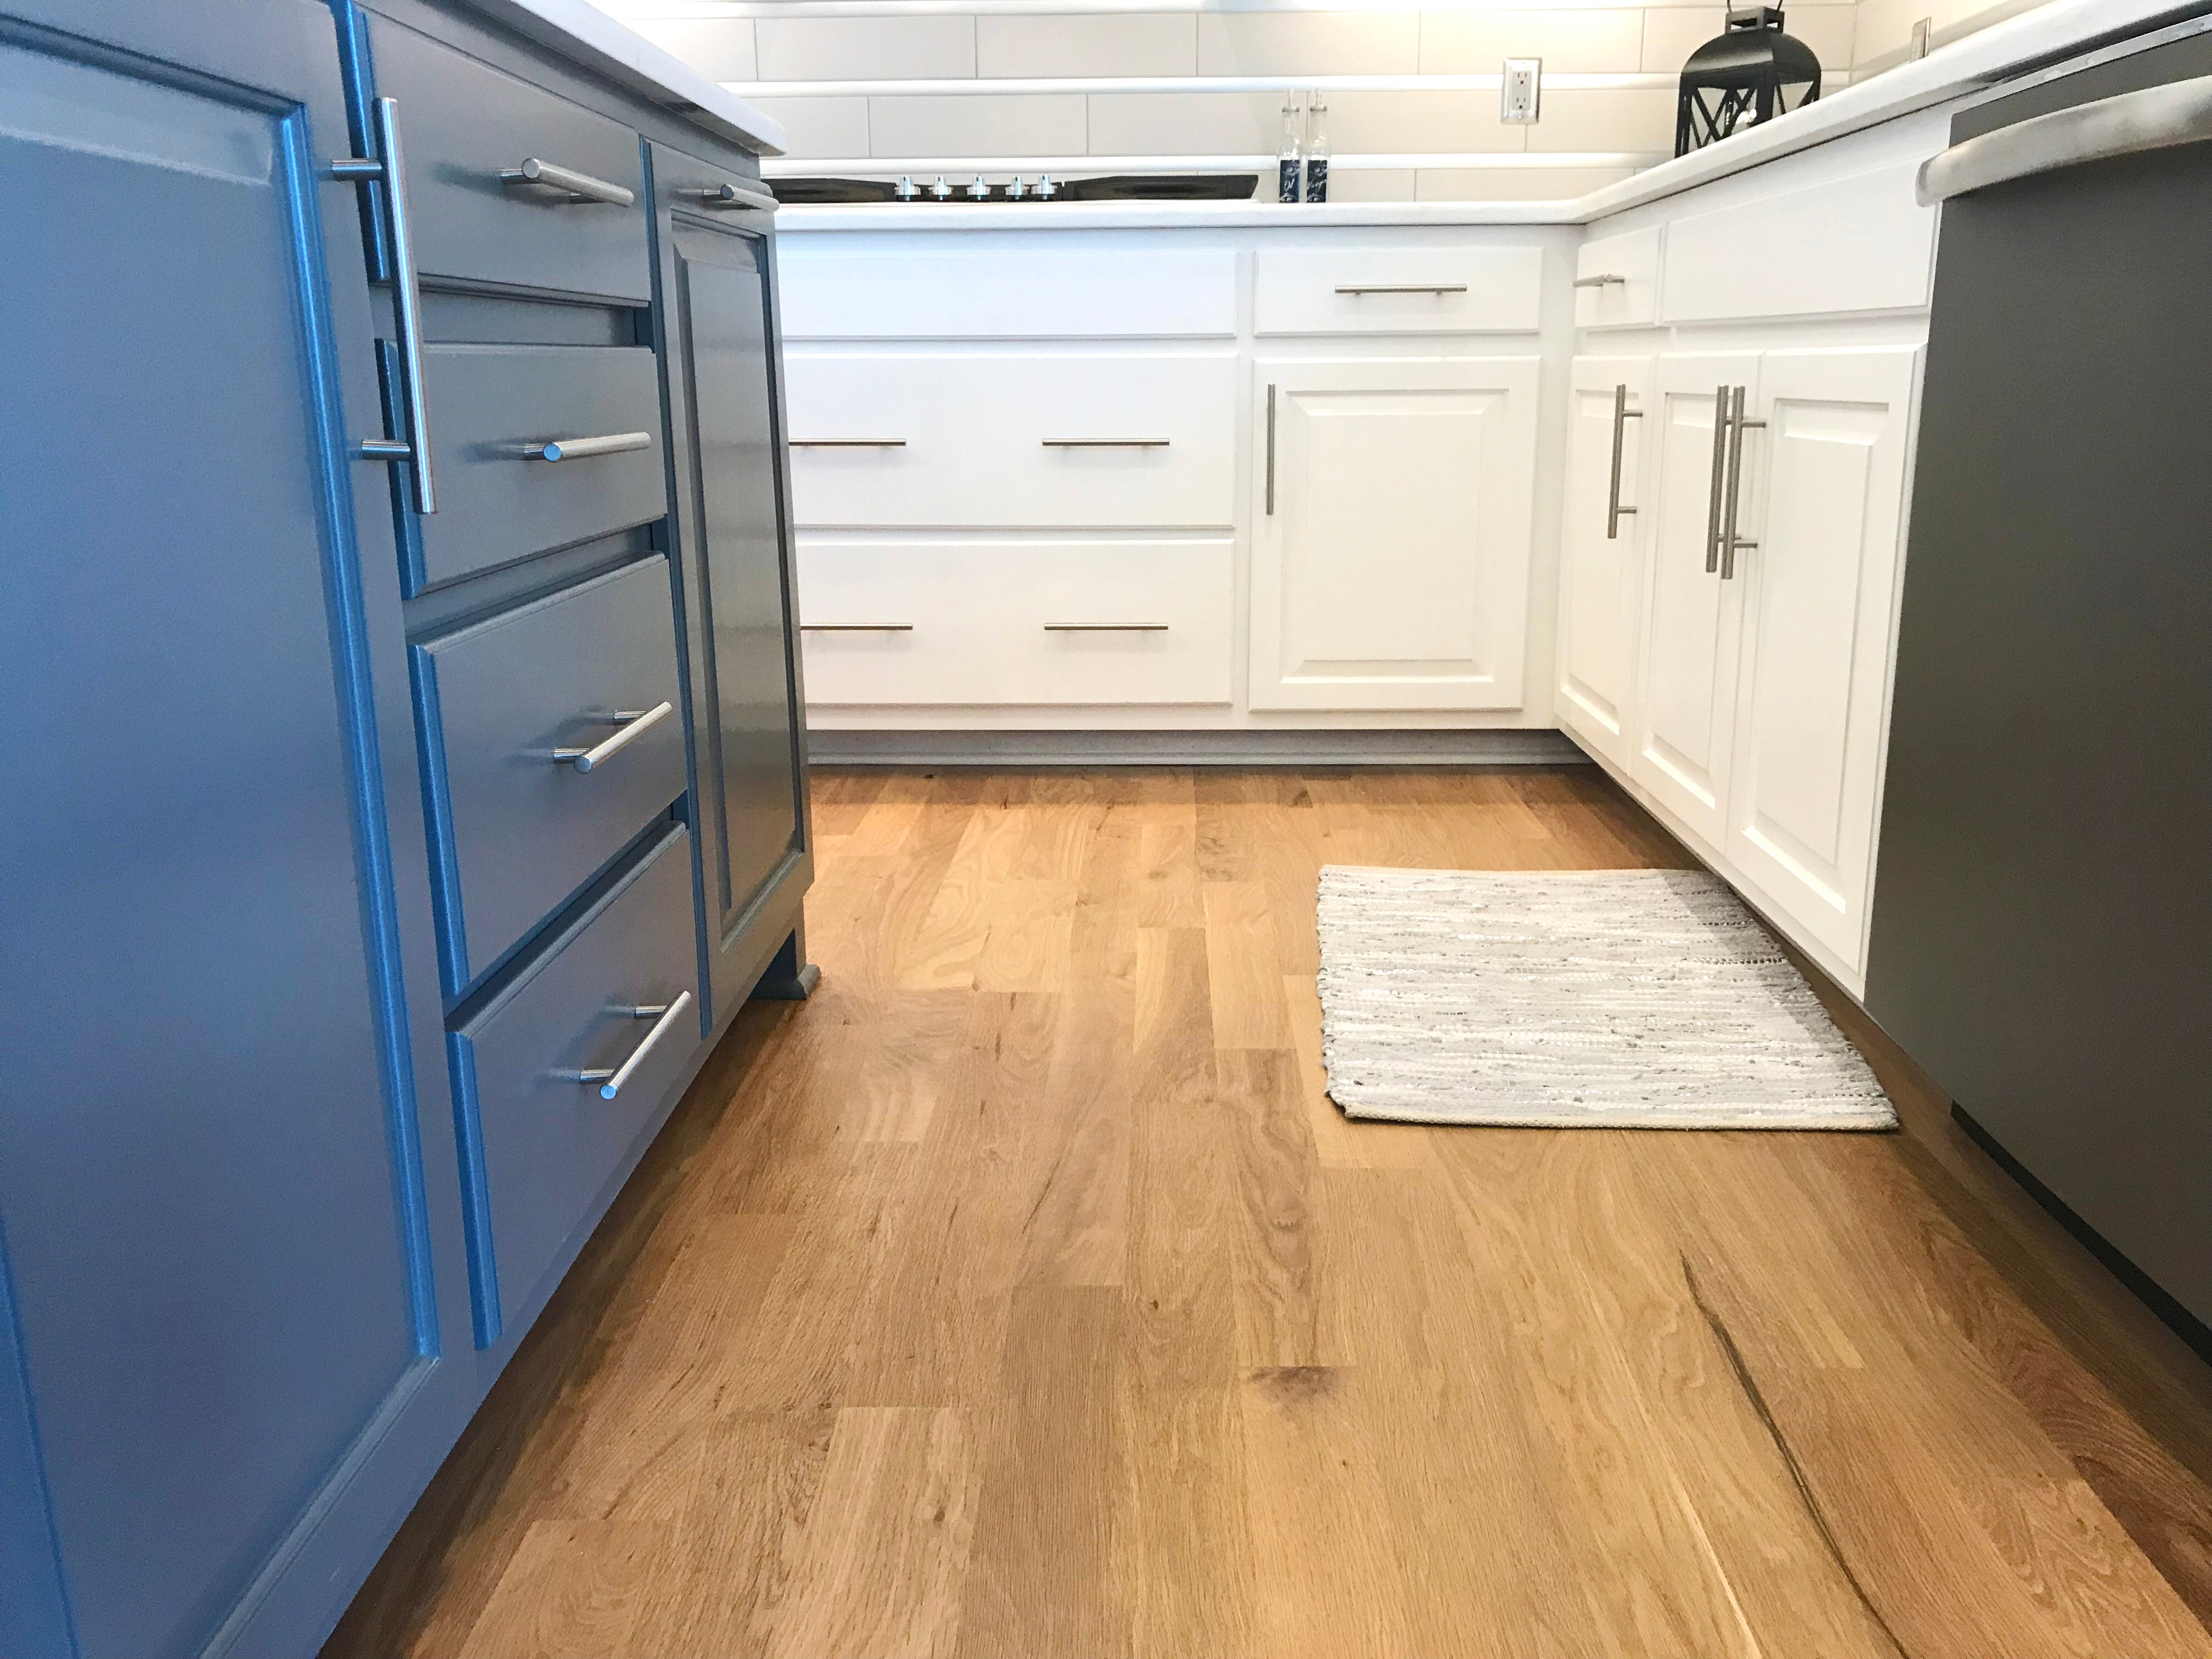 How To Disinfect Hardwood Floors Clorox, Care Of Hardwood Floors In Kitchen